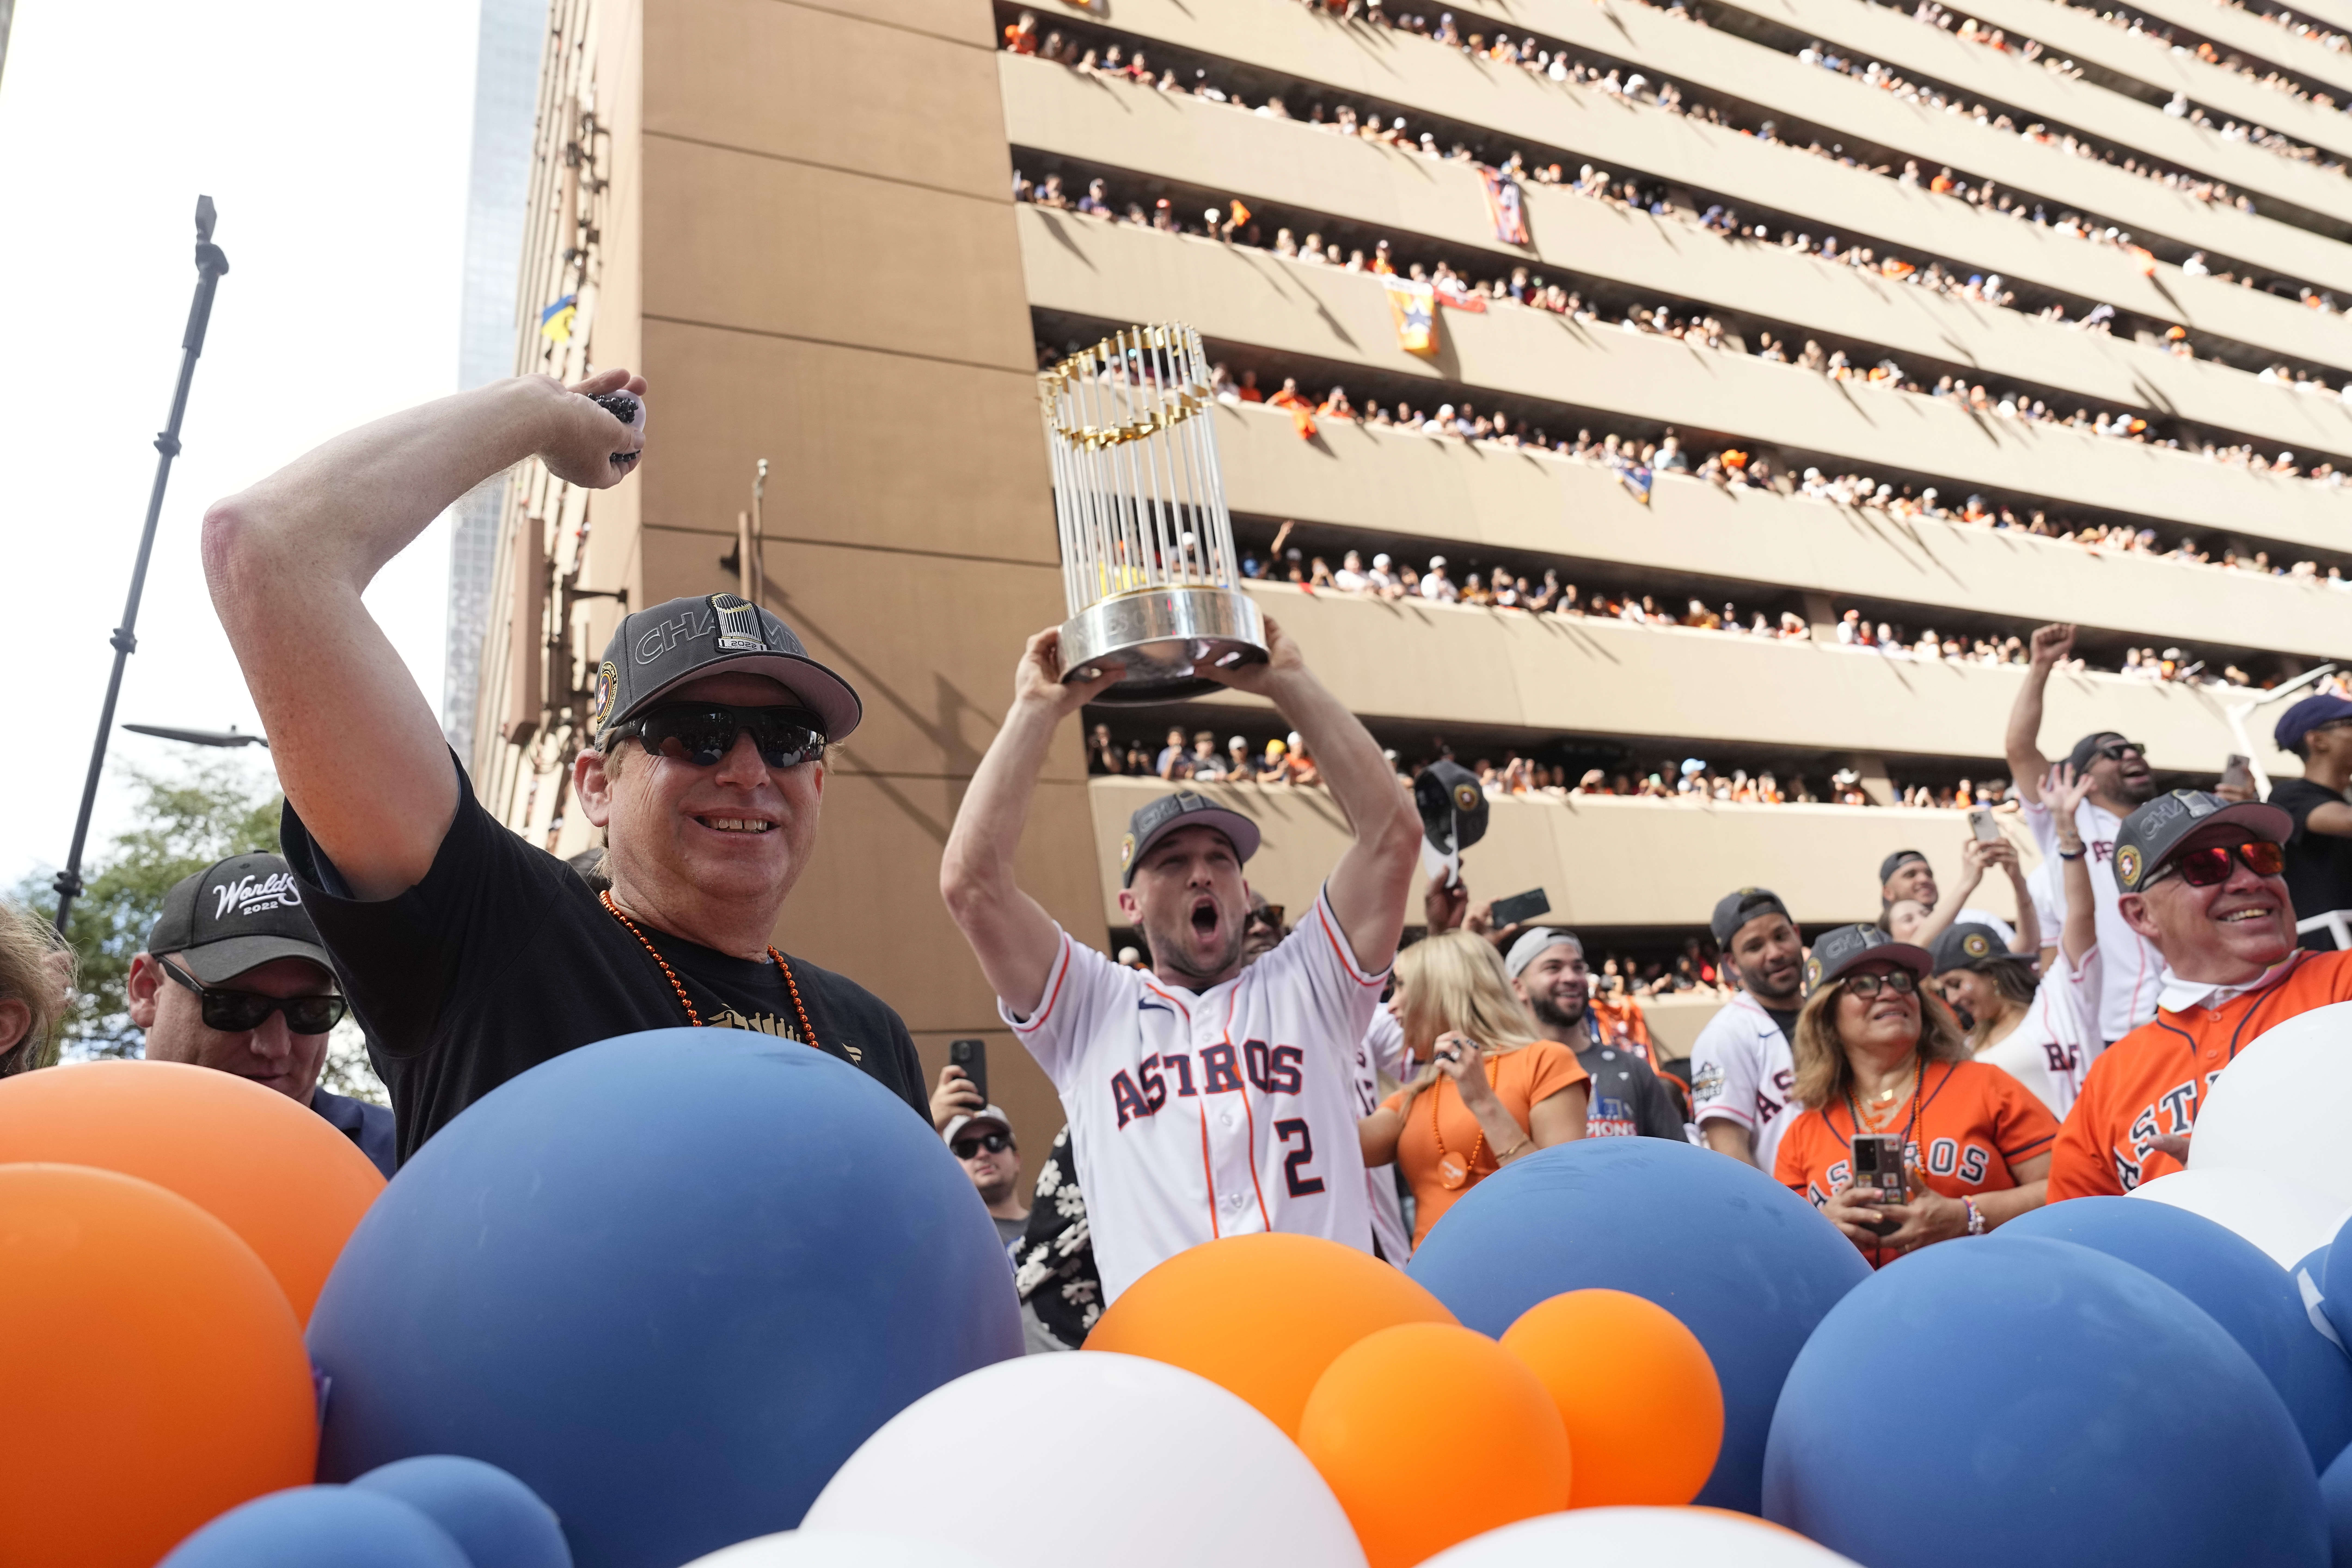 Astros World Series parade 2022: Fans celebrate Houston Astros